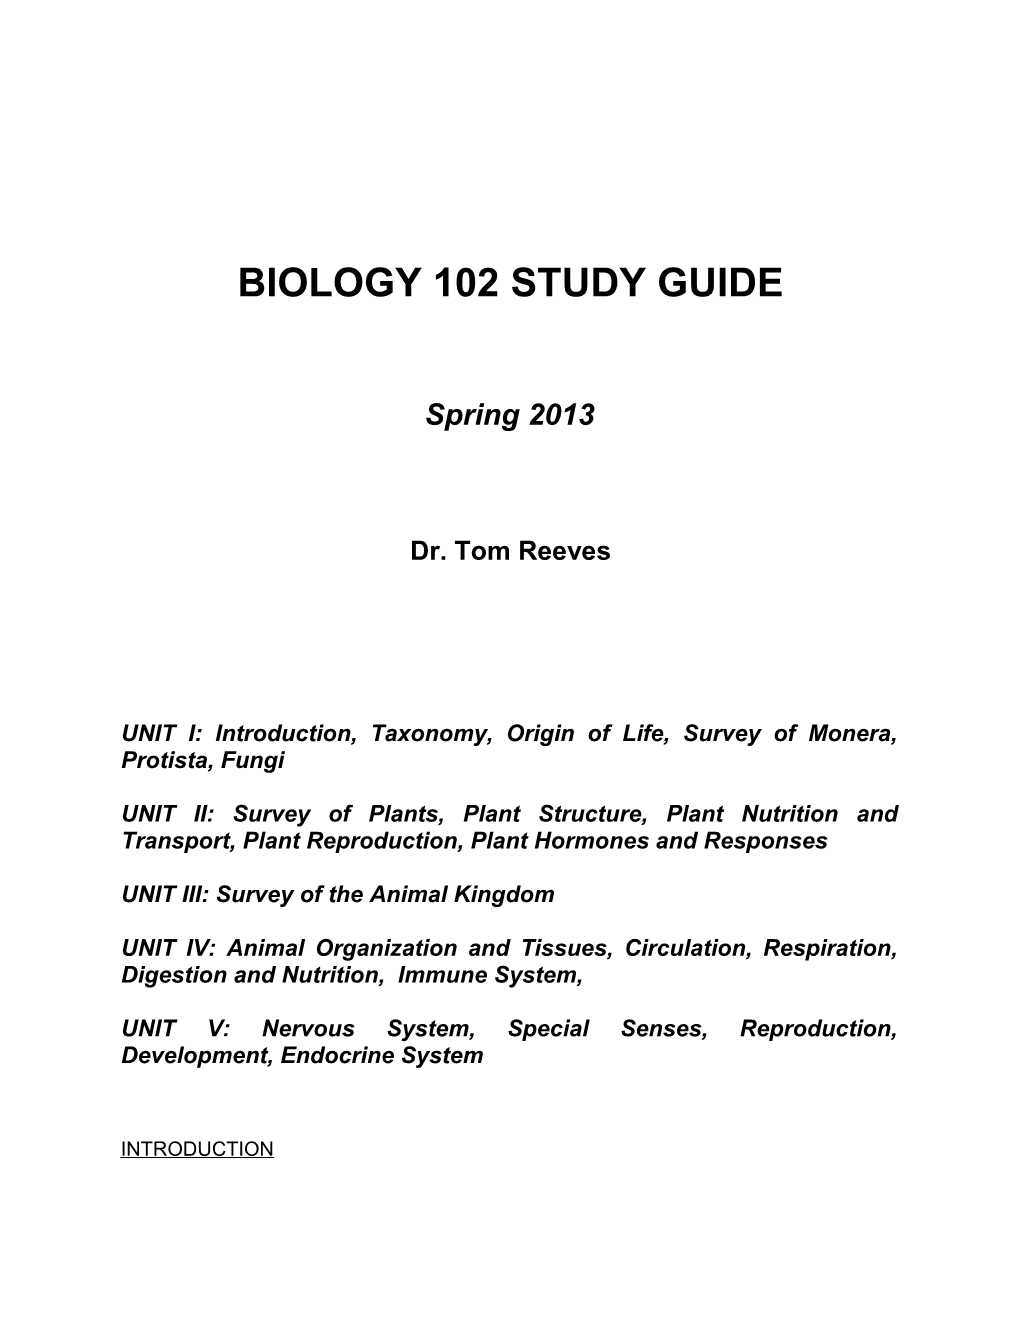 UNIT I: Introduction, Taxonomy, Origin of Life, Survey of Monera, Protista, Fungi